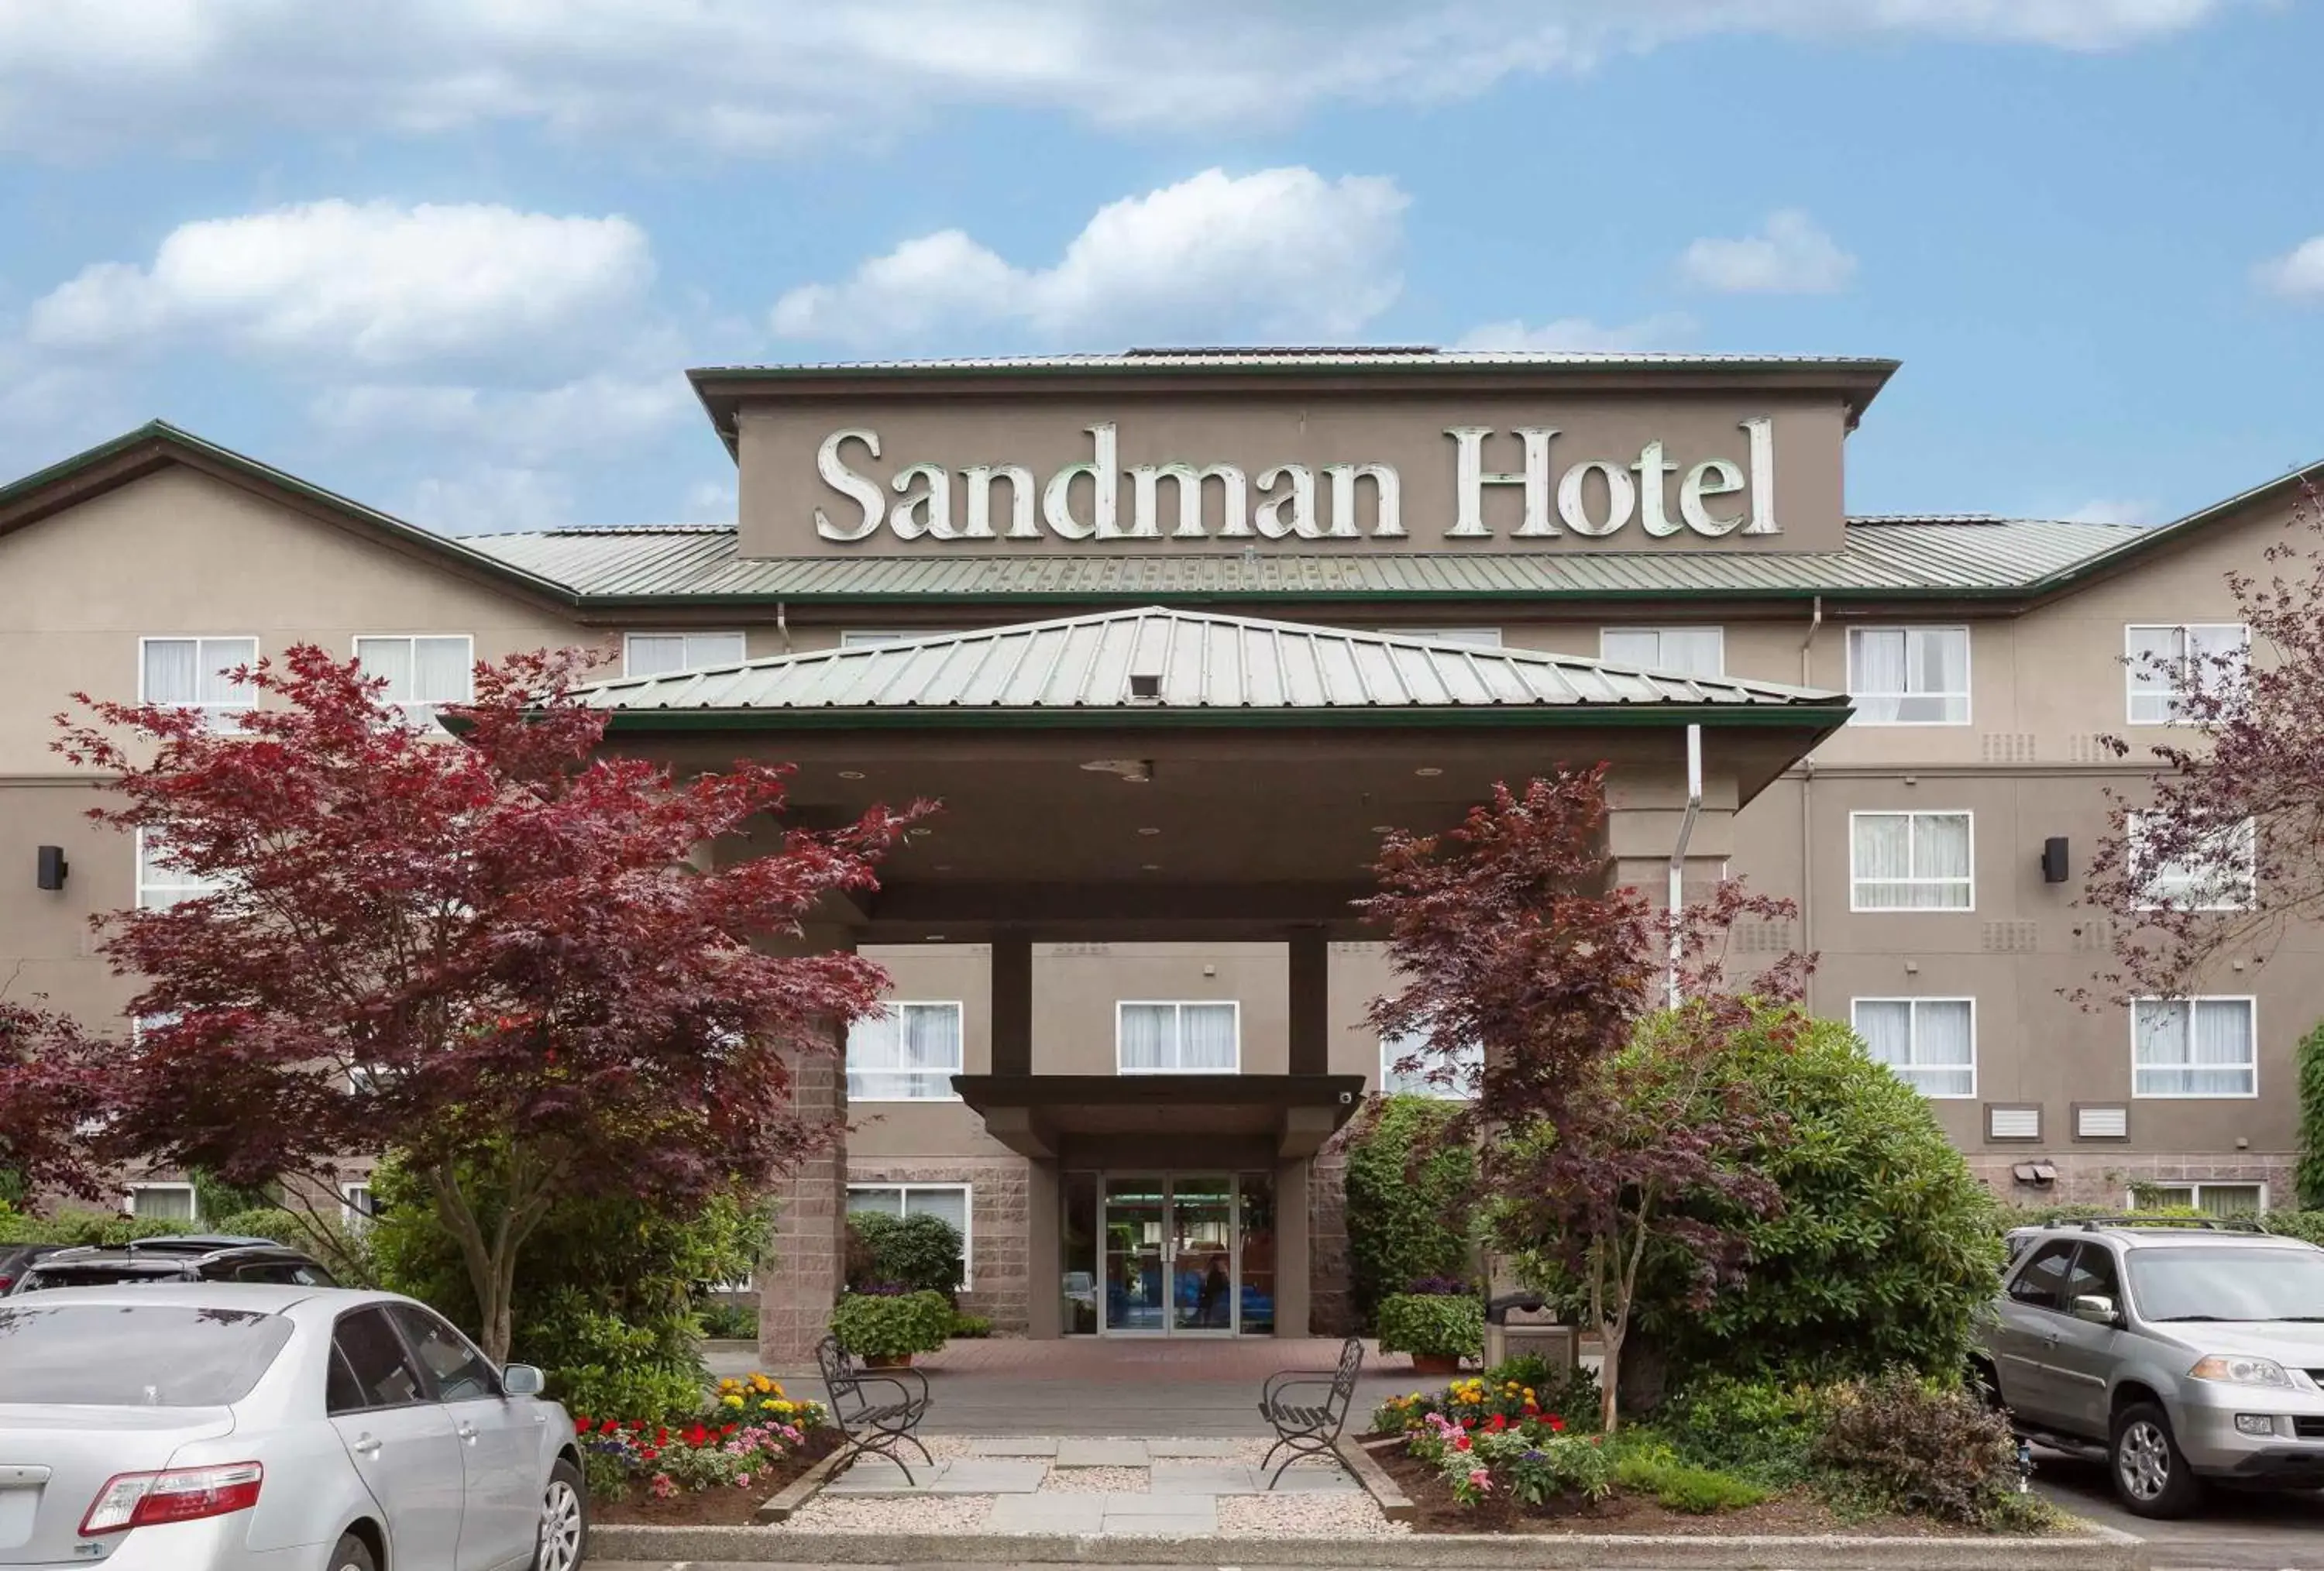 Property building in Sandman Hotel Langley